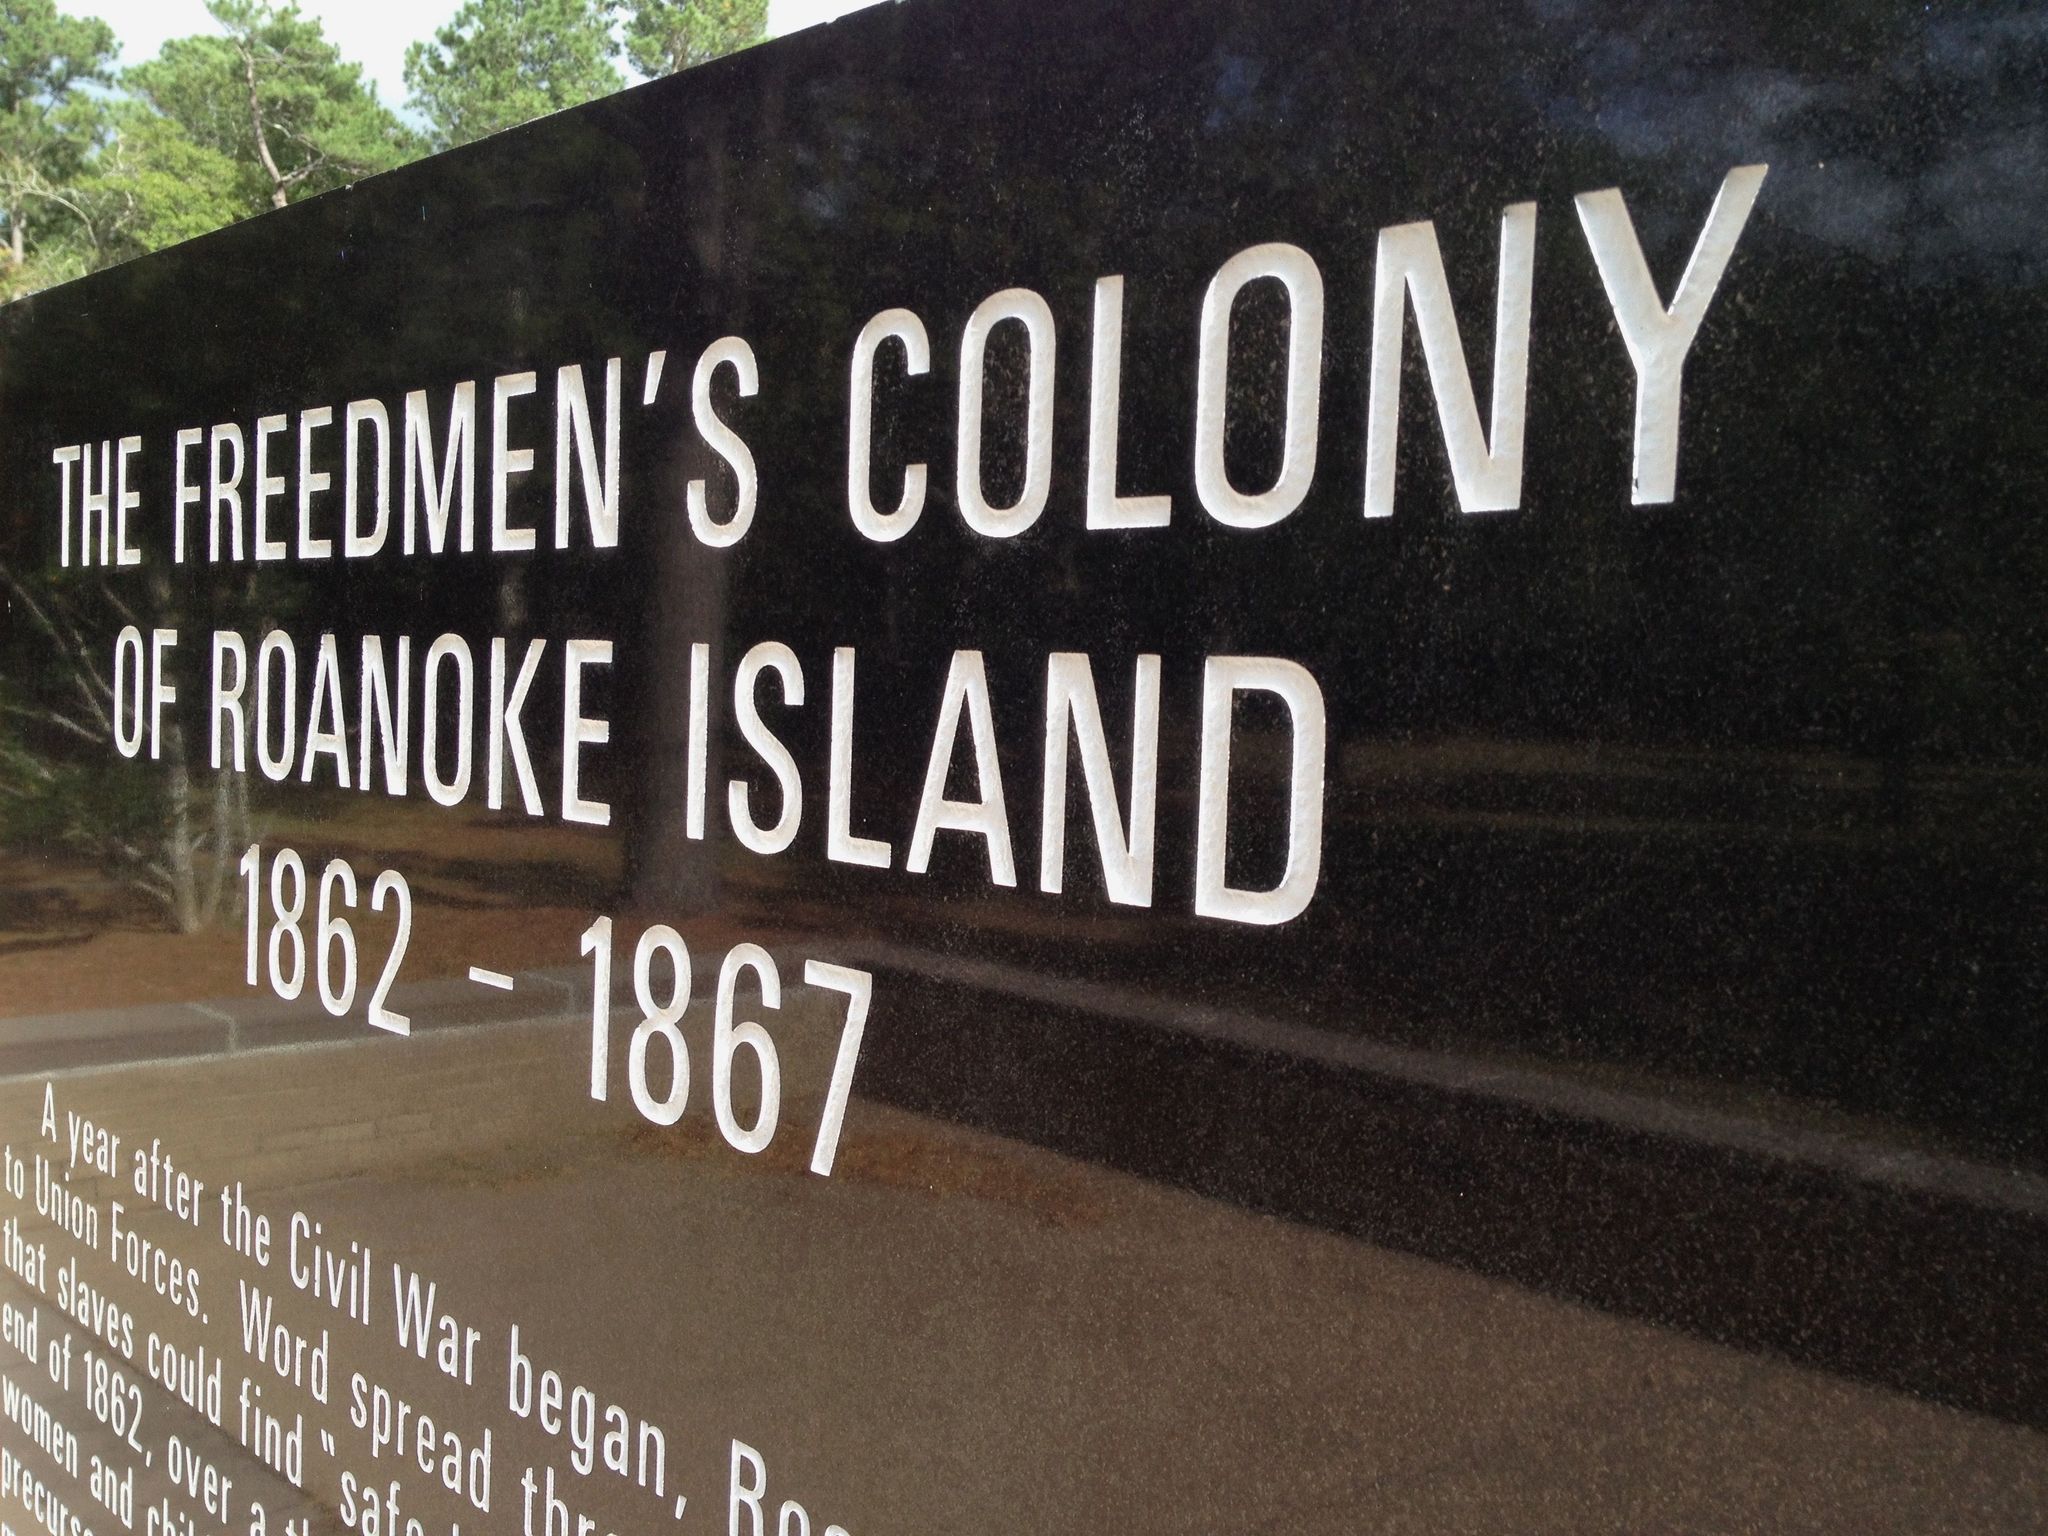 Commemorating the Roanoke Island Freedmen's Colony